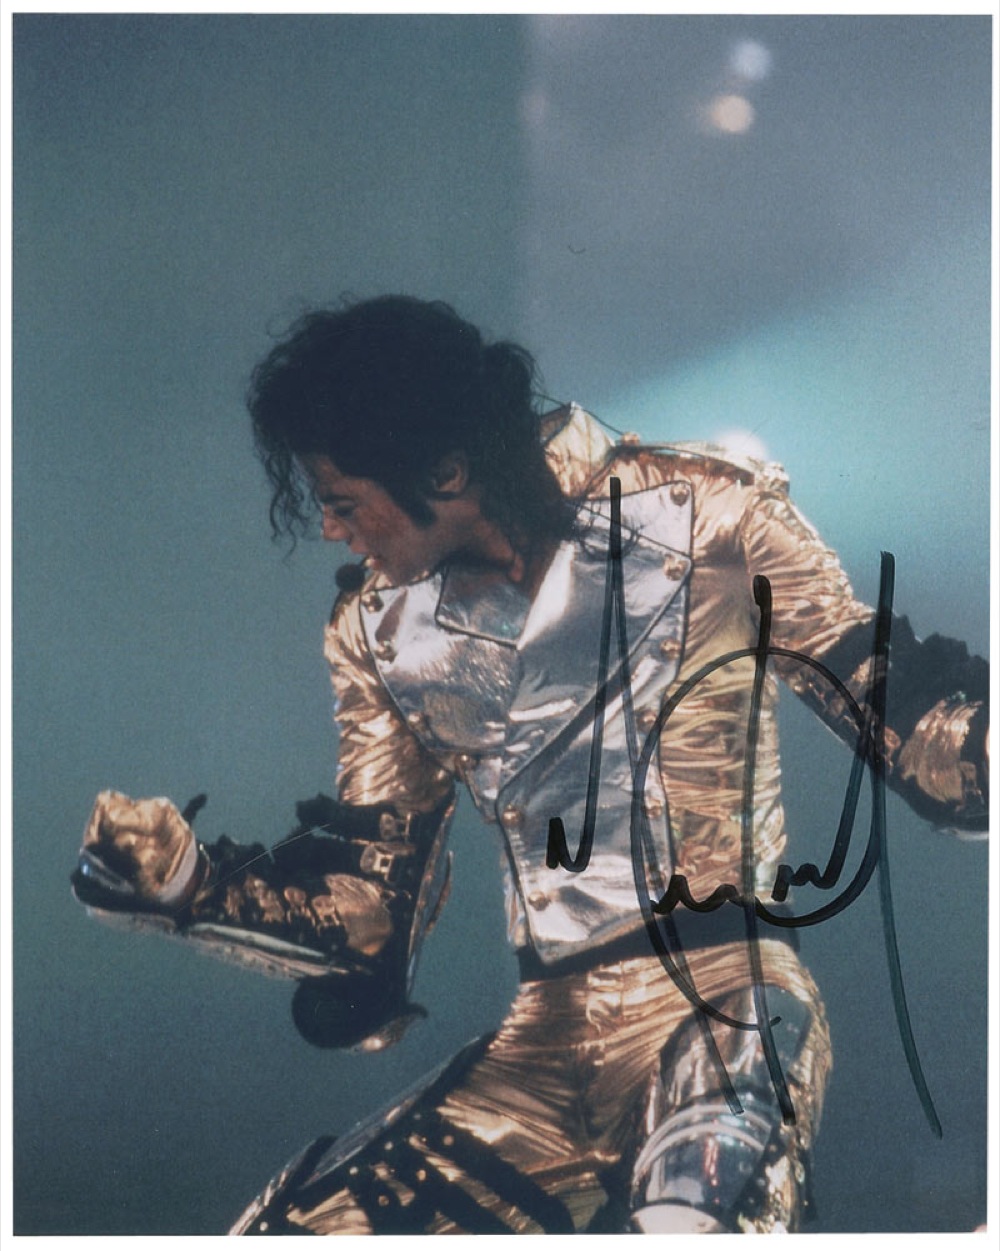 Lot #853 Michael Jackson